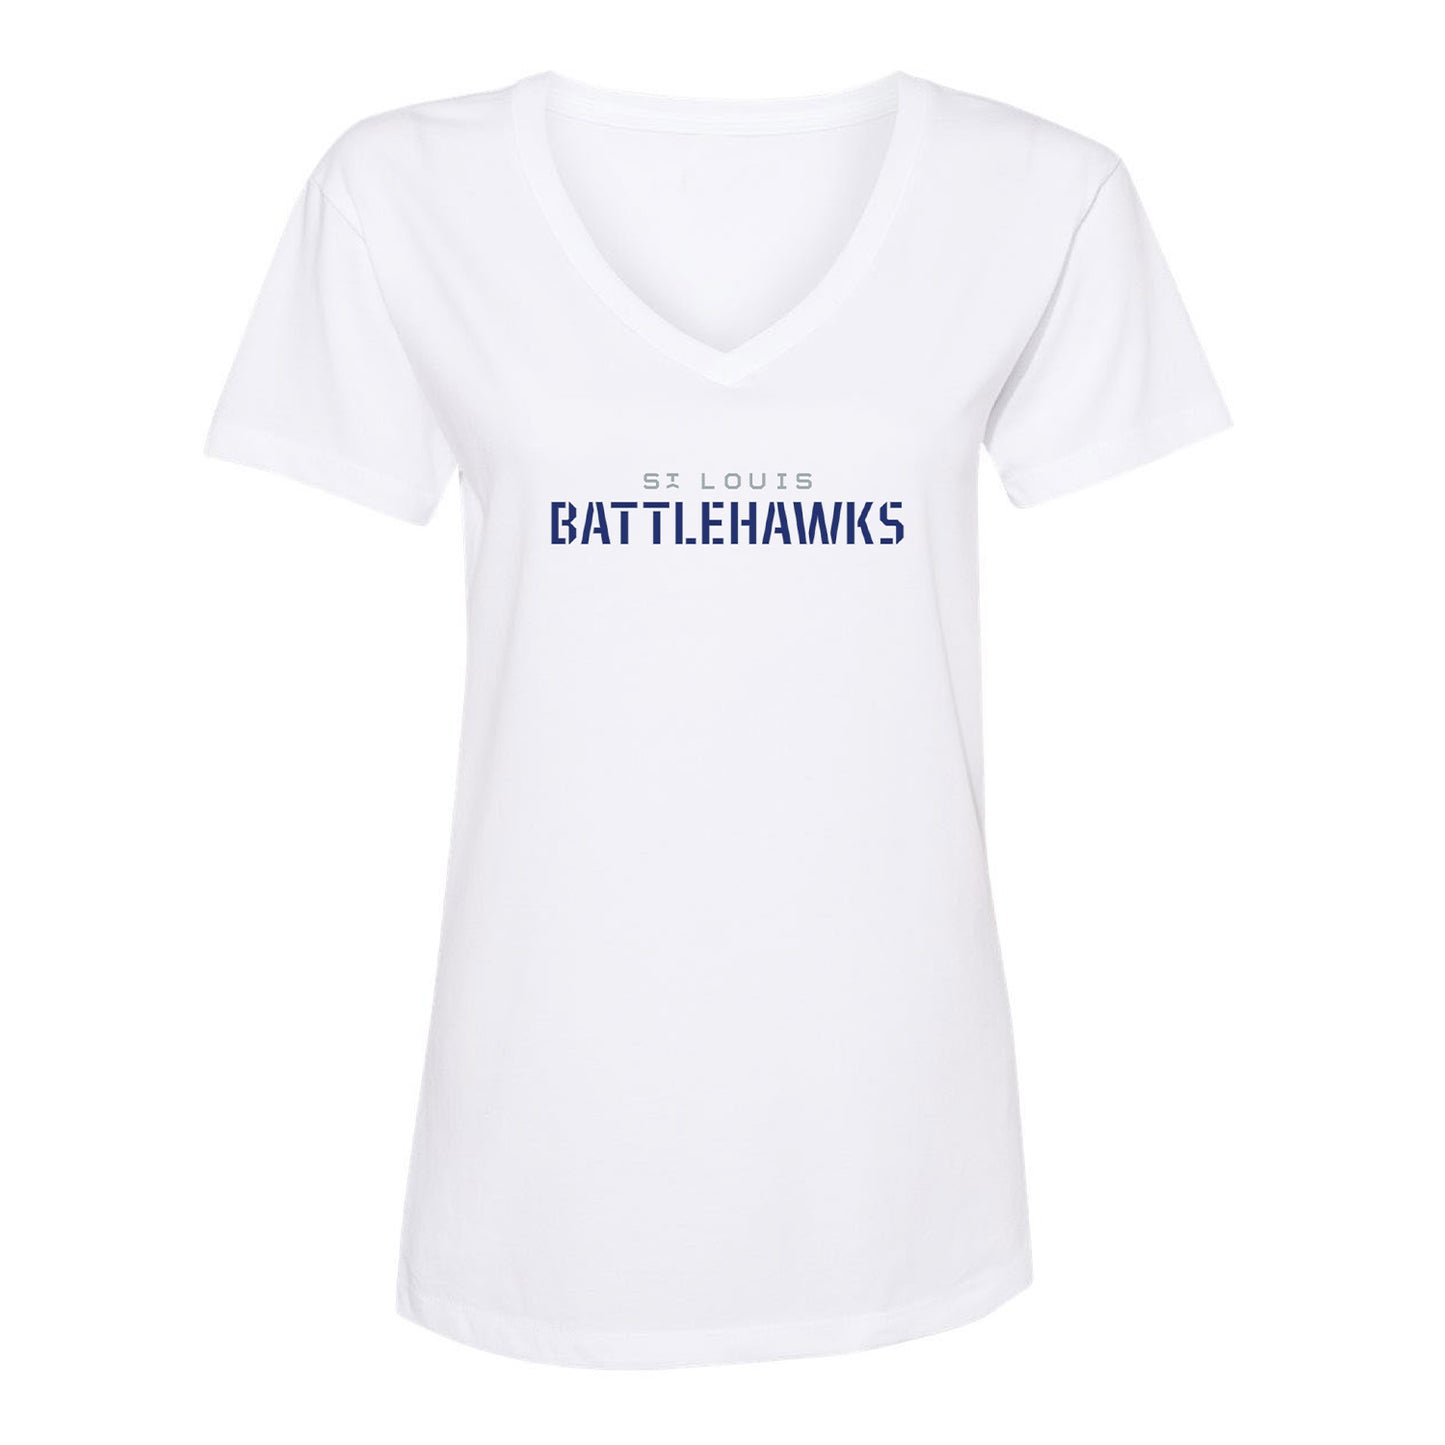 St. Louis Battlehawks Ladies T-Shirt In White - Front View